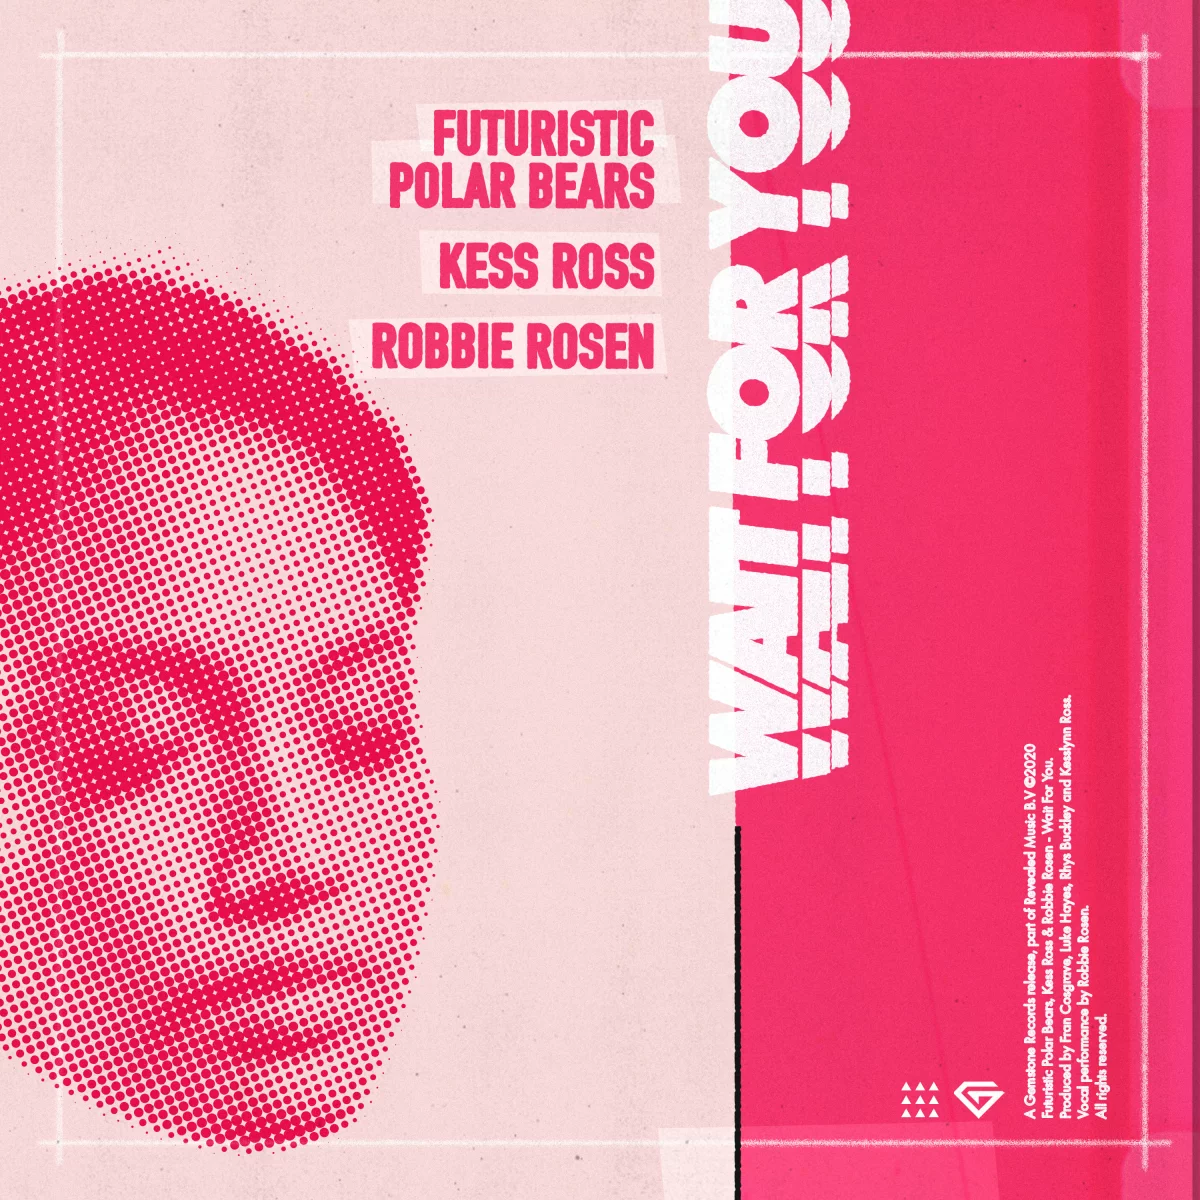 Wait For You - Futuristic Polar Bears, Kess Ross & Robbie Rosen⁠